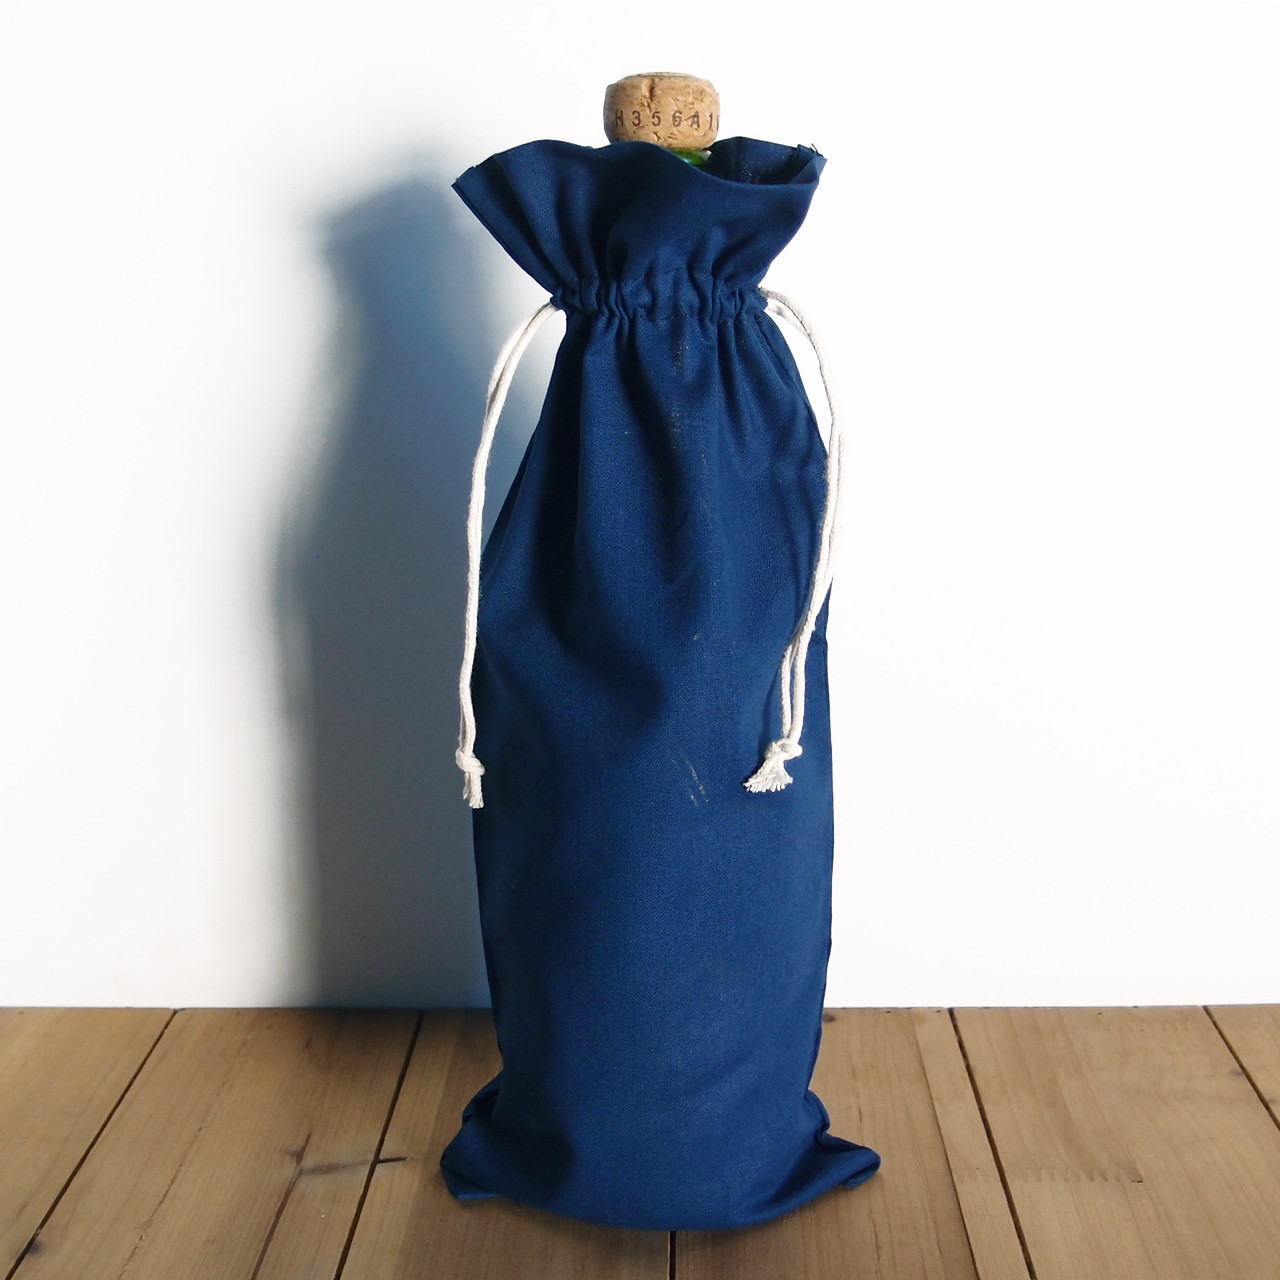 6 x 14 inches Navy Blue Cotton Natural Drawstring Bag, Wholesale Cotton Drawstring Bags at Packaging Decor
B978-3-5